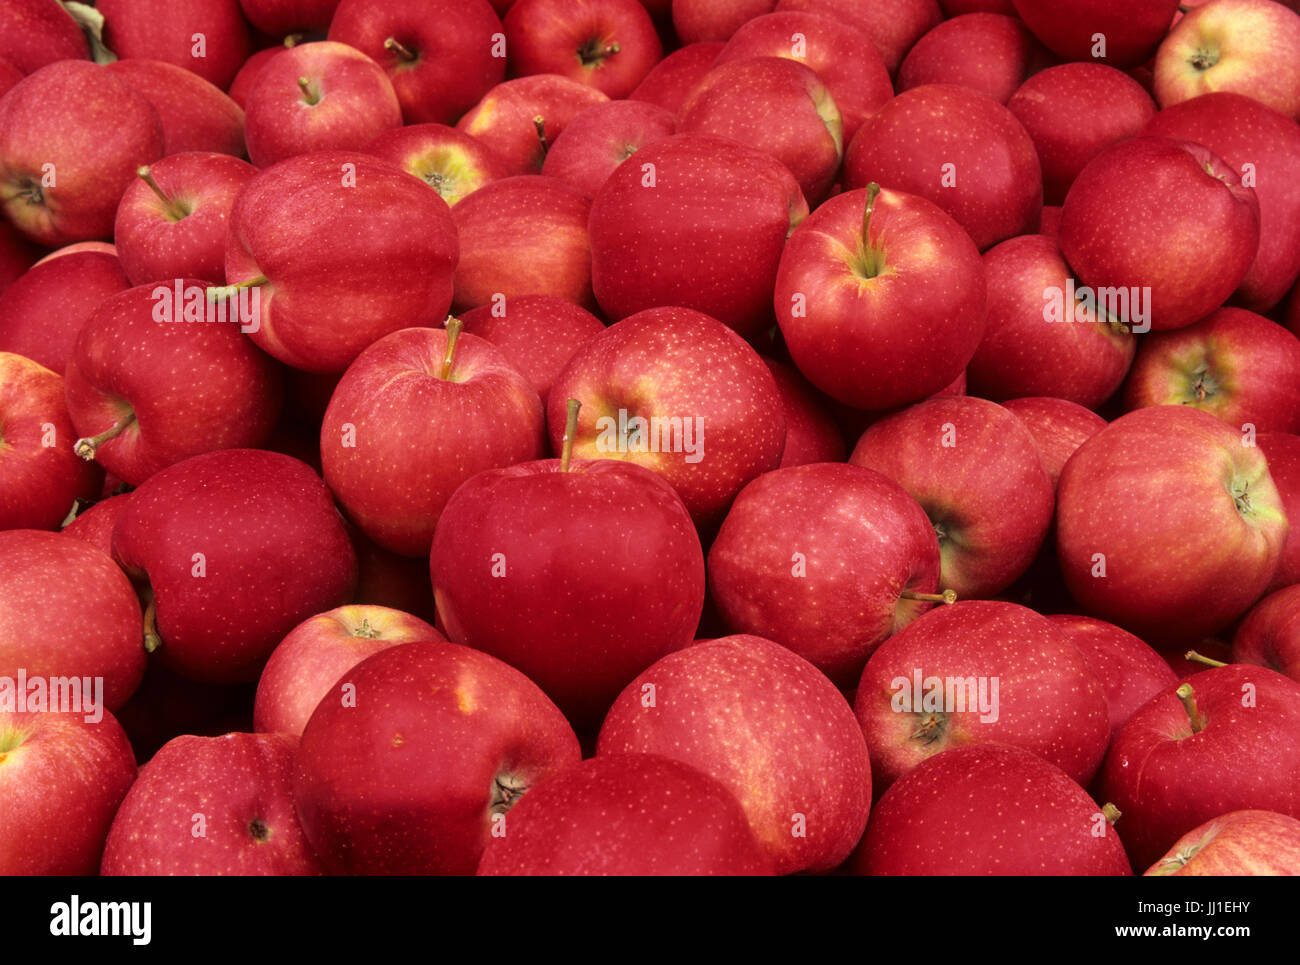 https://c8.alamy.com/comp/JJ1EHY/gala-apples-in-bin-chelan-county-washington-JJ1EHY.jpg